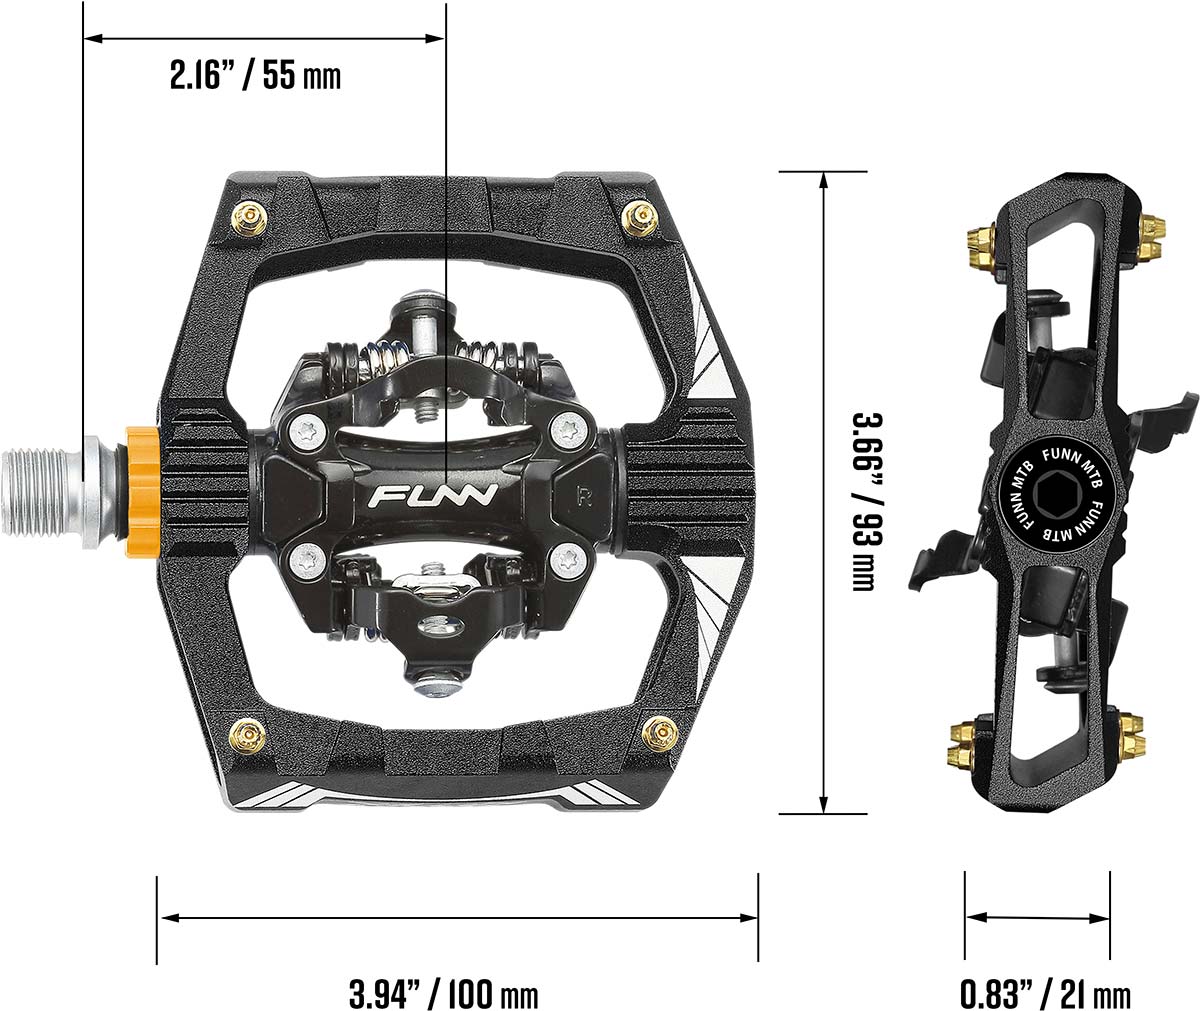 funn ripper clipless pedal dimensions q-factor profile platform body size